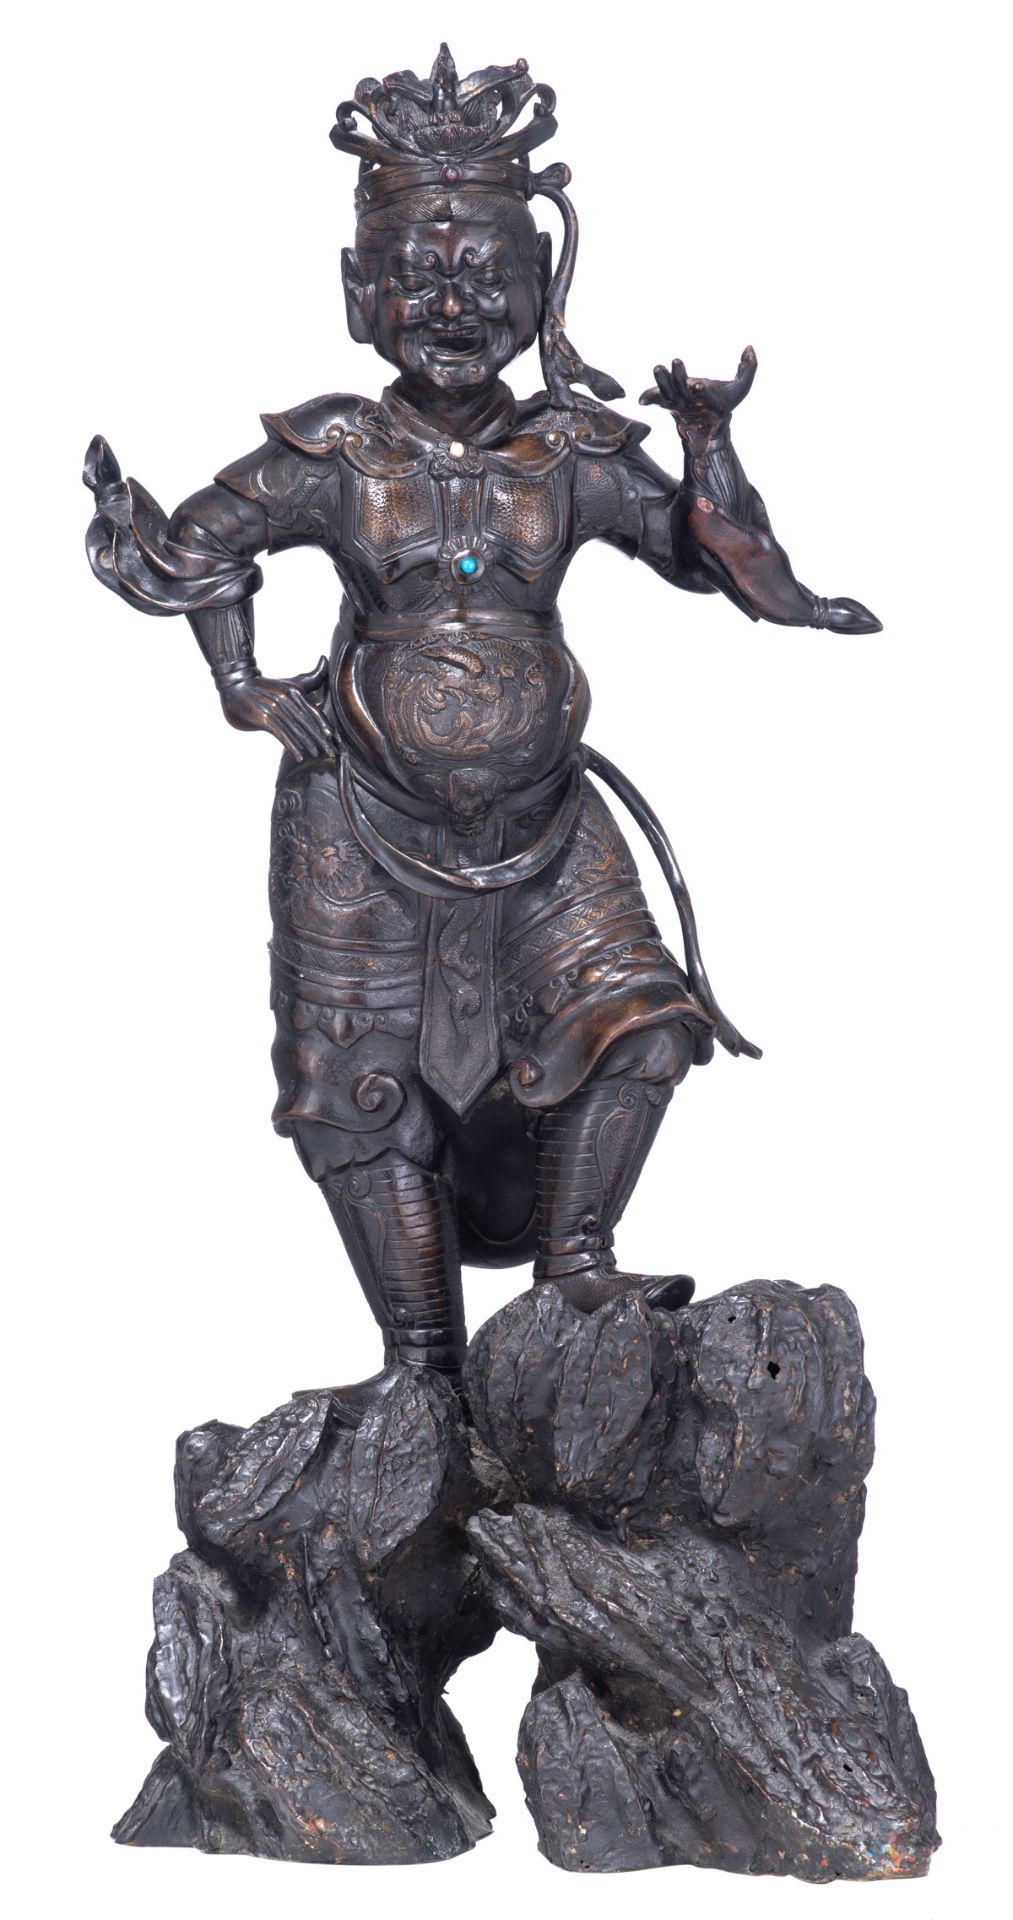 No visible signature, a Chinese temple guard, patinated bronze and semi-precious stone inlay, H 60,5